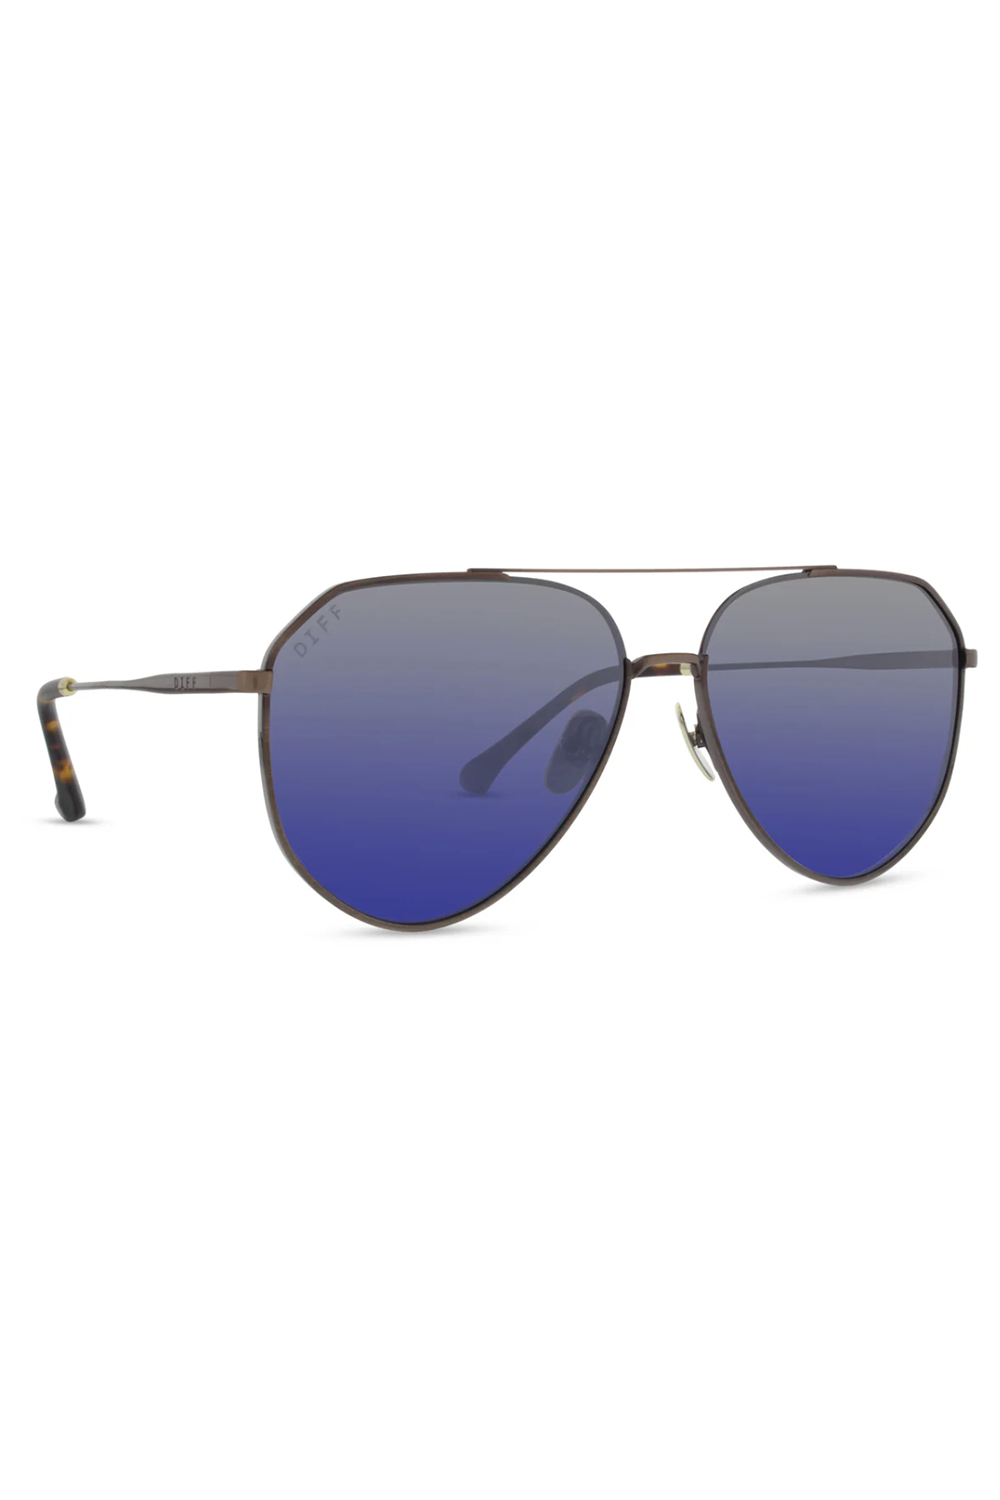 Dash Sunglasses - Brushed Brown Grey Blue